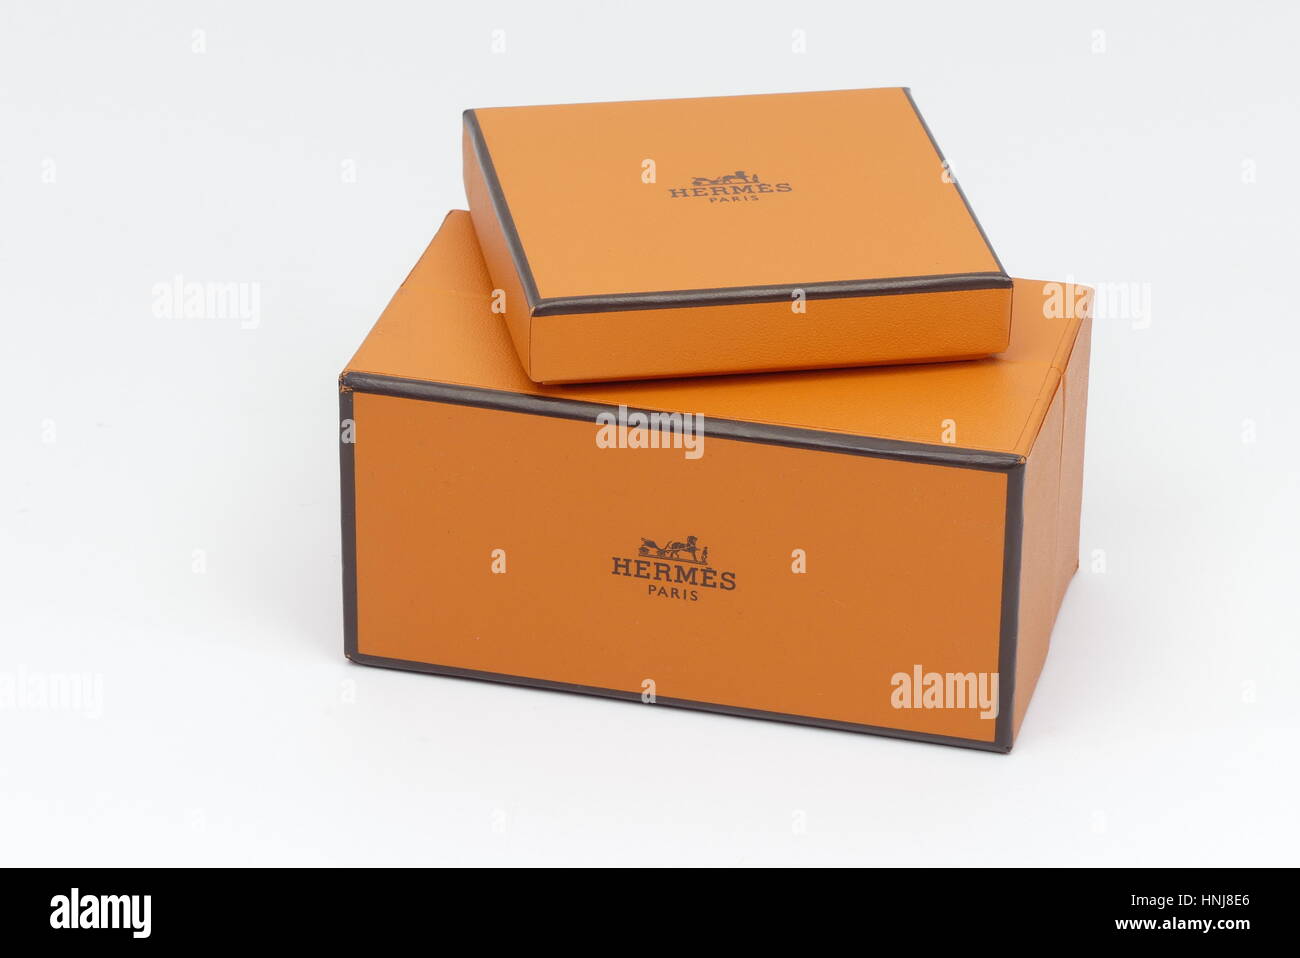 Lorient, France - February 06, 2017: Closeup of Hermes Paris luxury orange  boxes on white background Stock Photo - Alamy